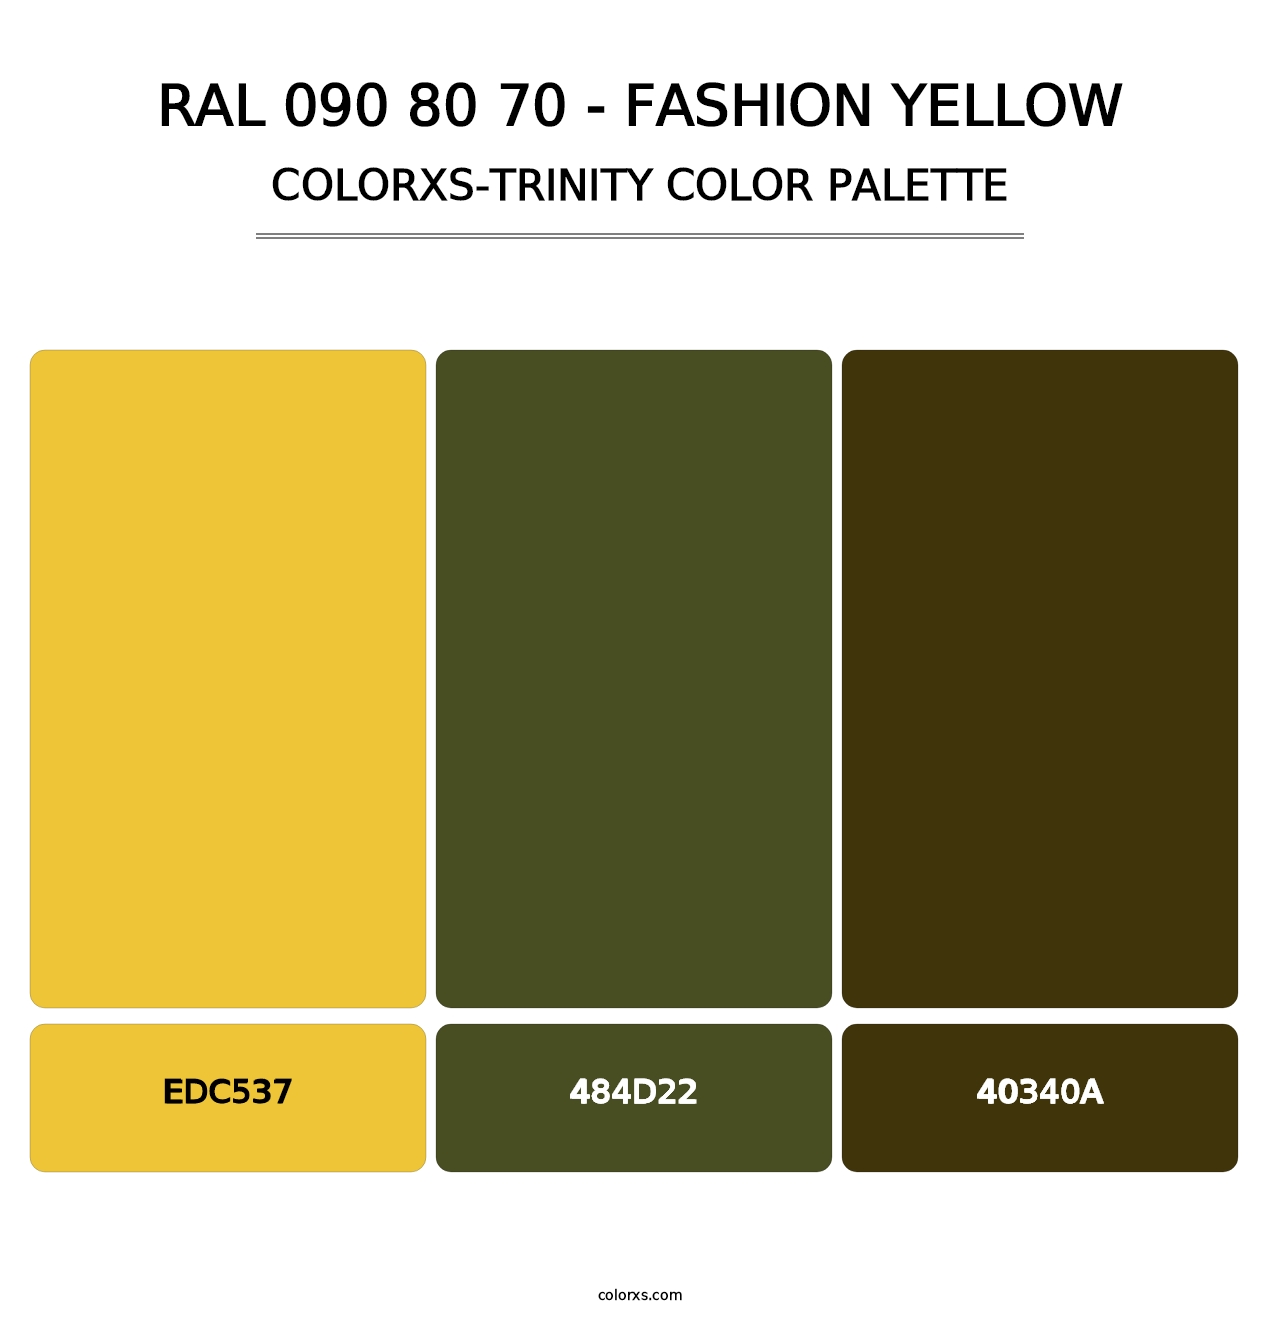 RAL 090 80 70 - Fashion Yellow - Colorxs Trinity Palette